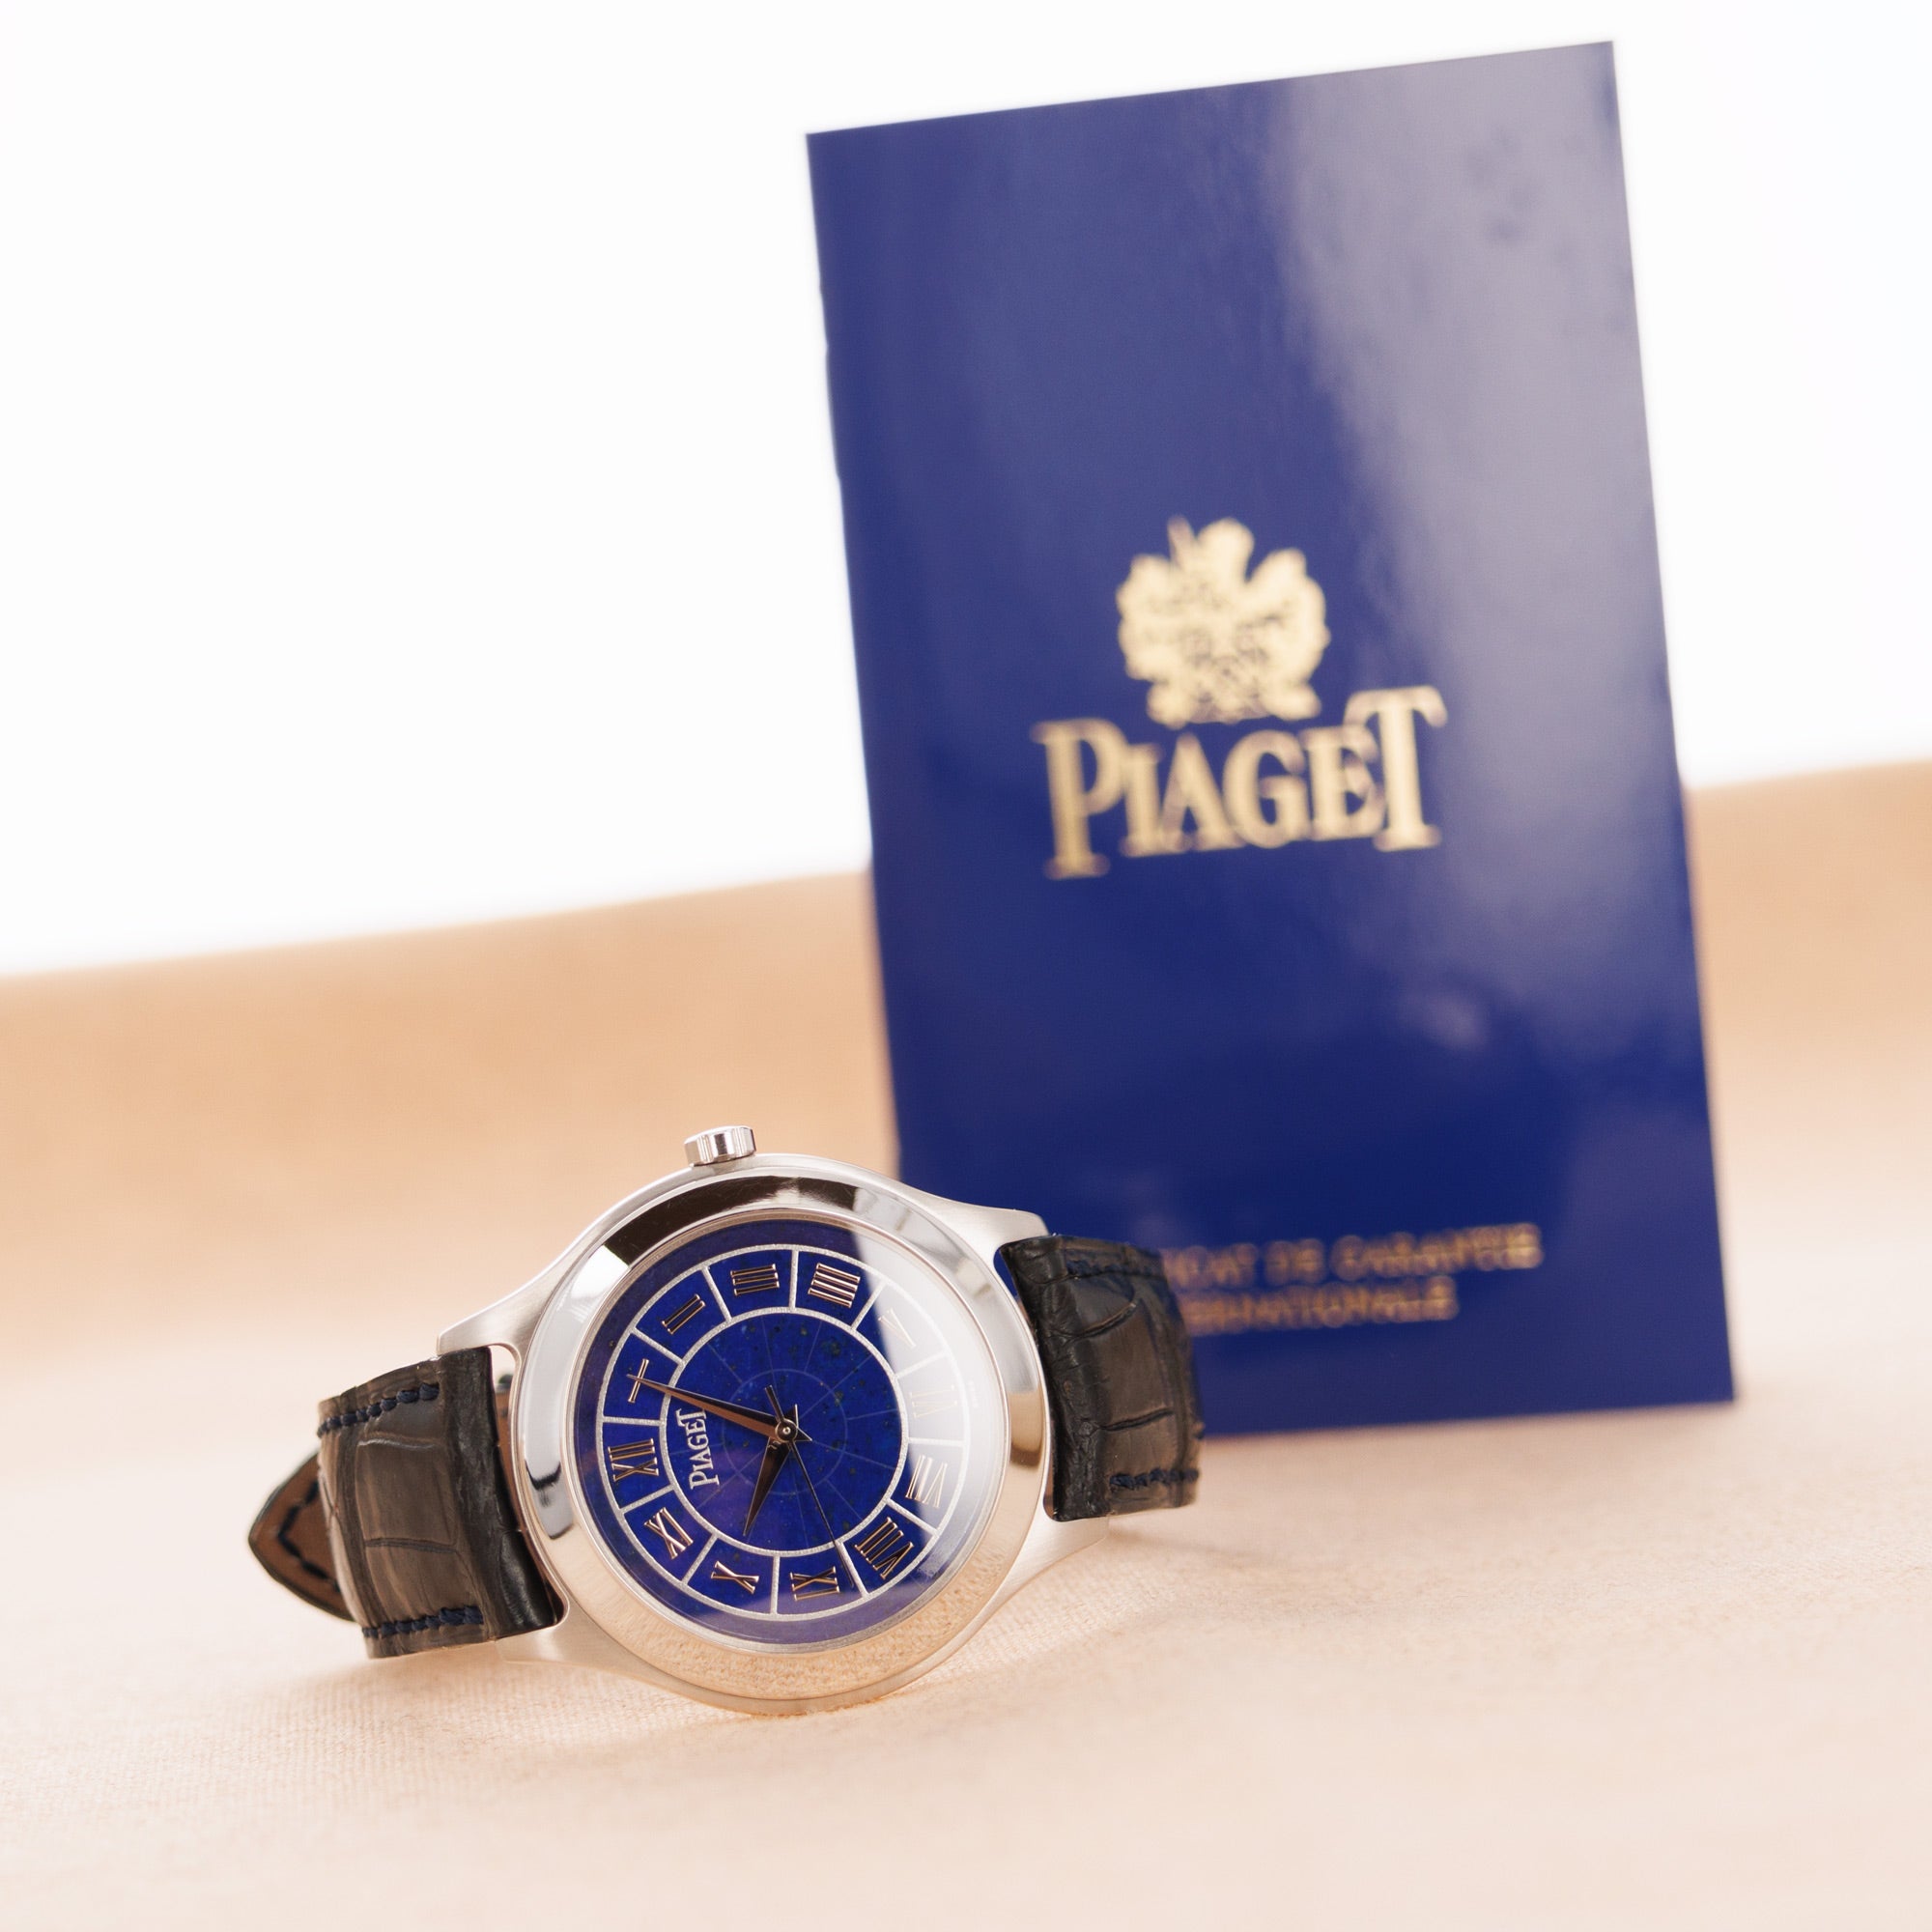 Piaget - Piaget White Gold Lapis Lazuli Watch Ref. 26011 - The Keystone Watches